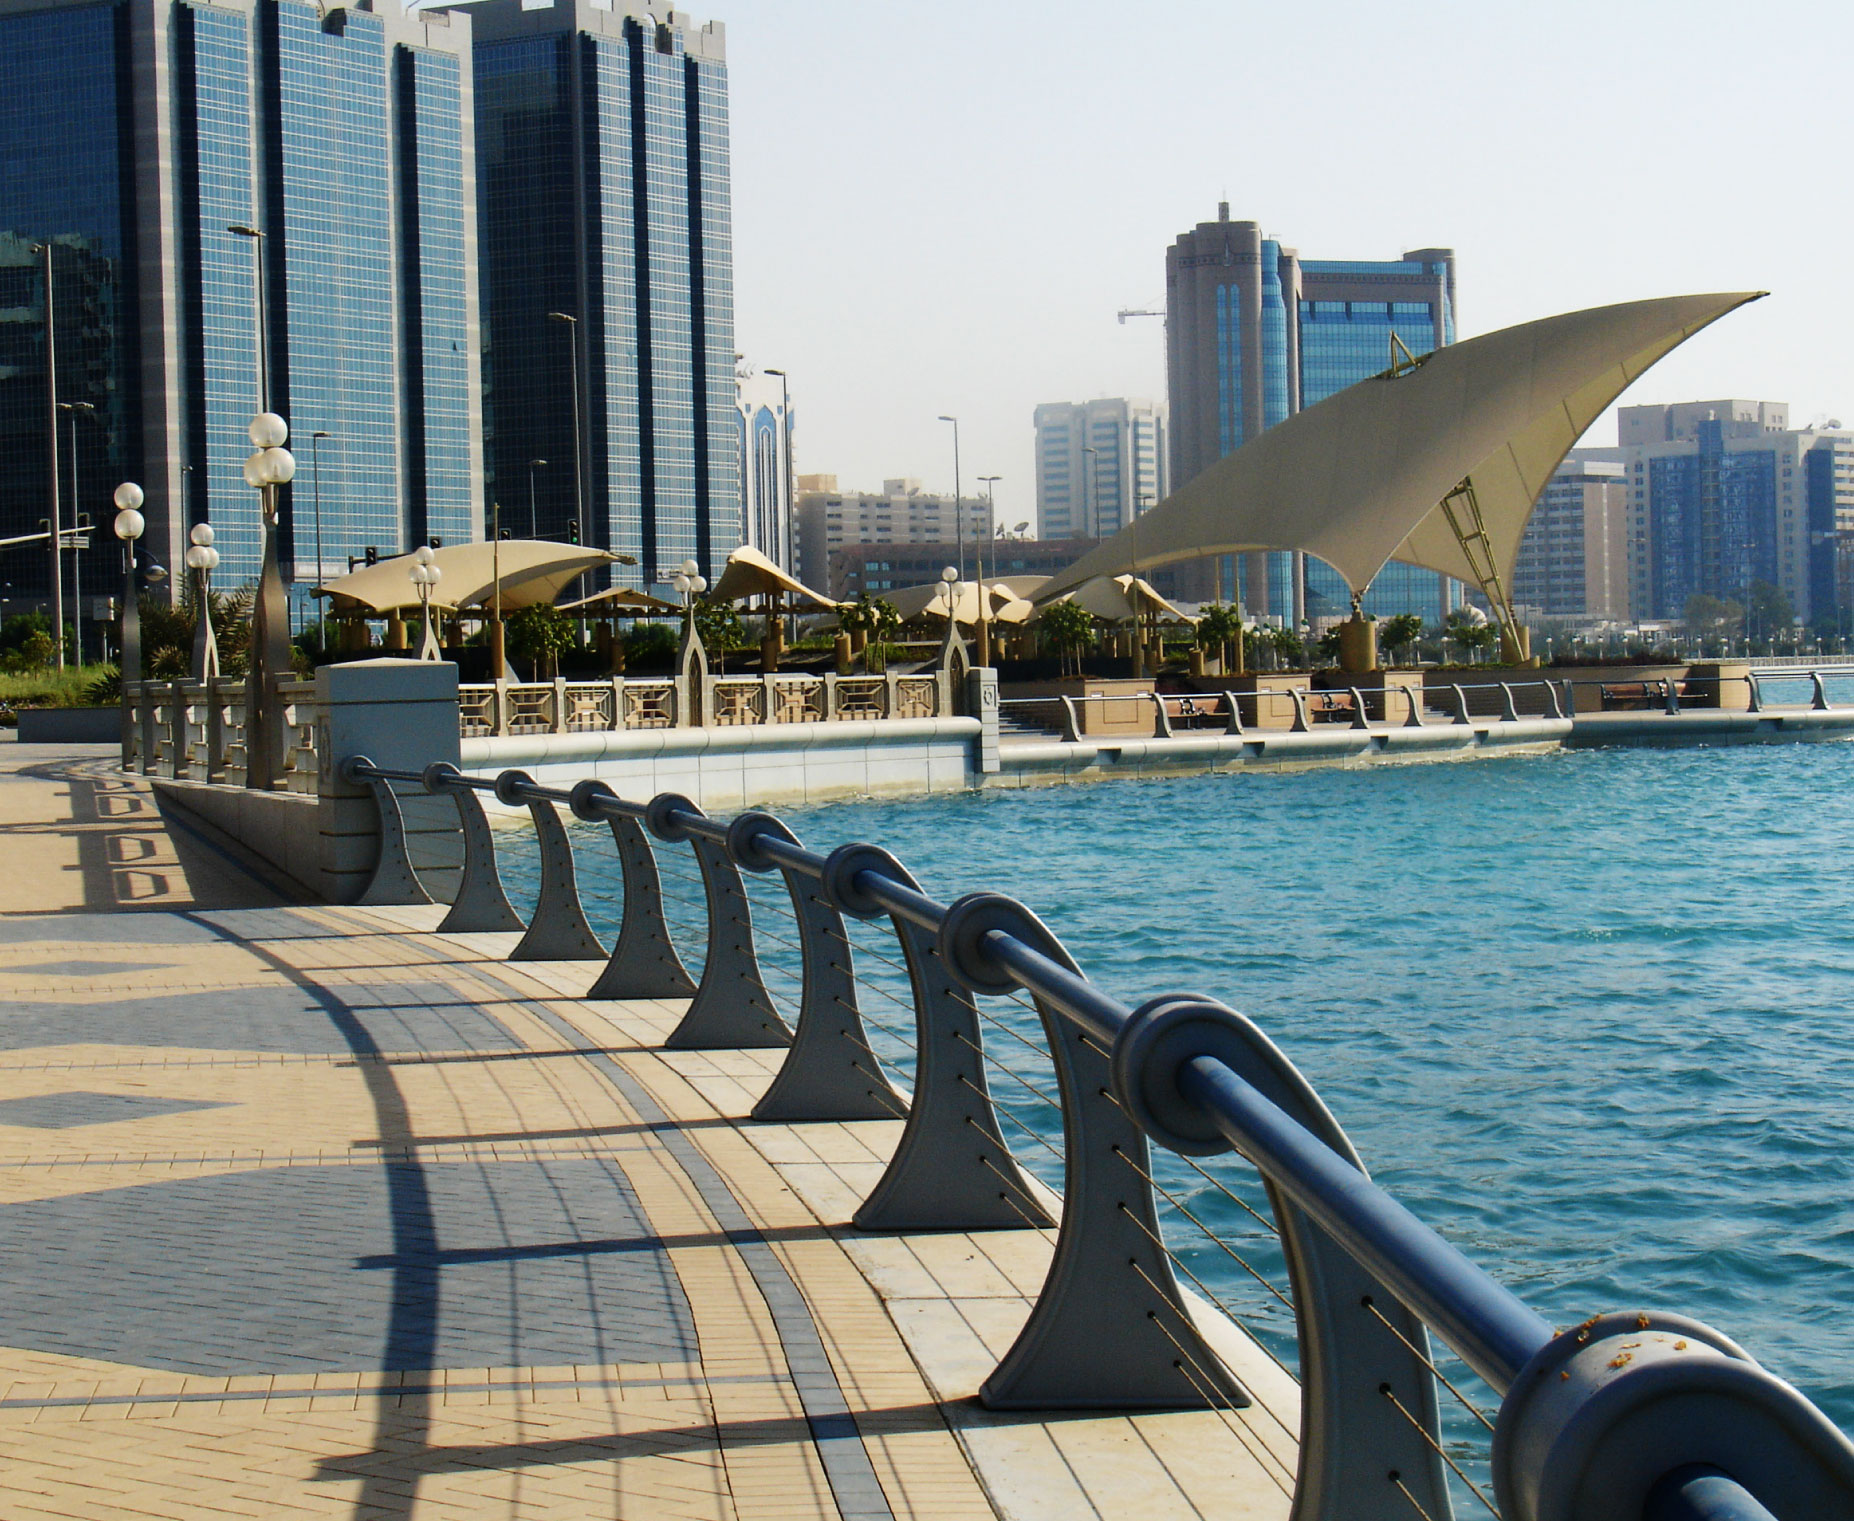 Abu Dhabi Corniche Waterfront 04-01.jpg